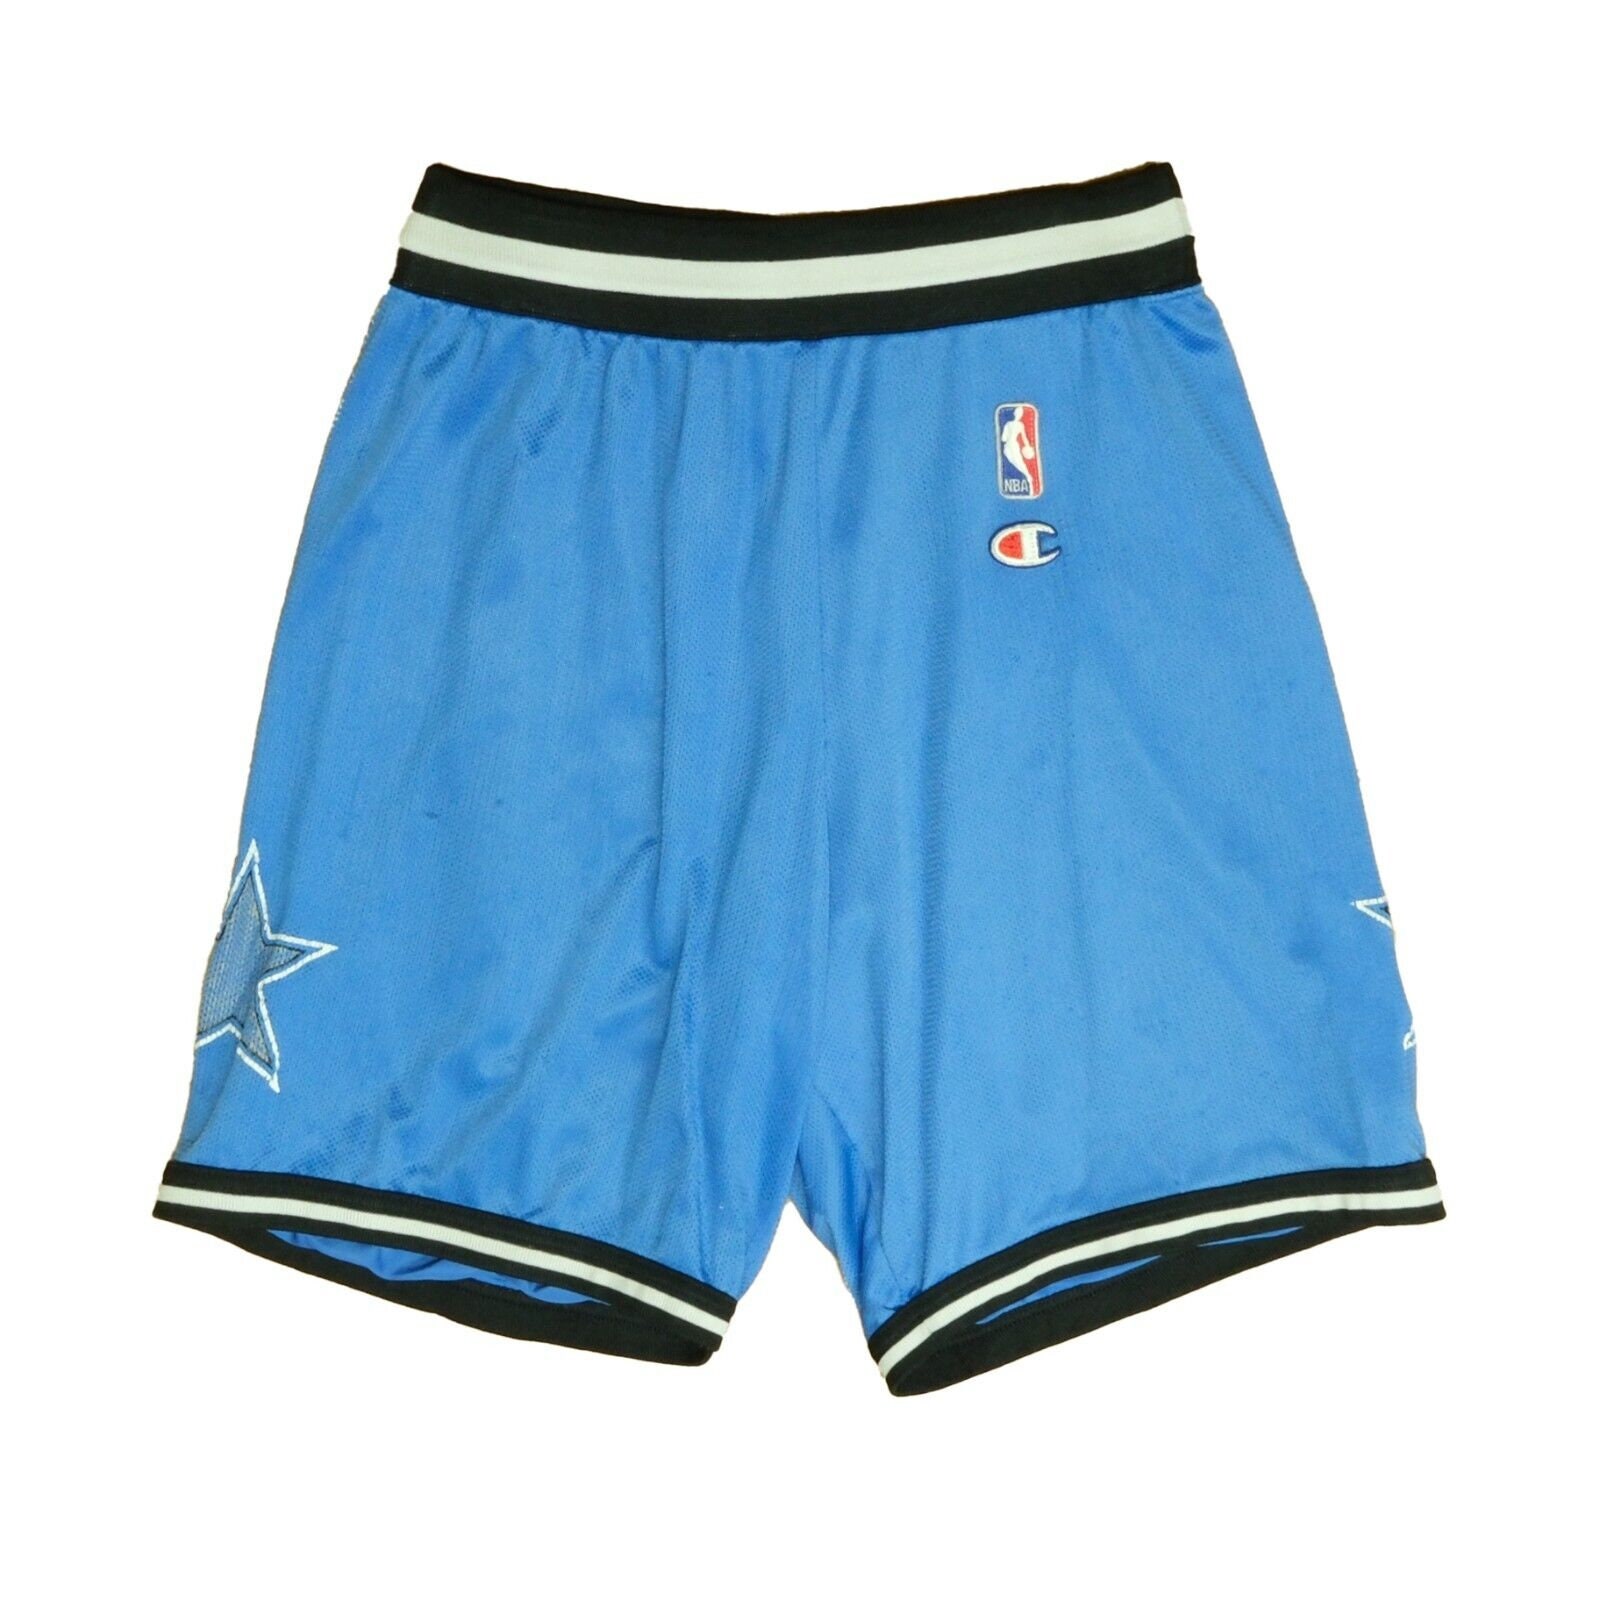 Vintage 1980s Chicago Bulls NBA Champion Basketball Shorts 